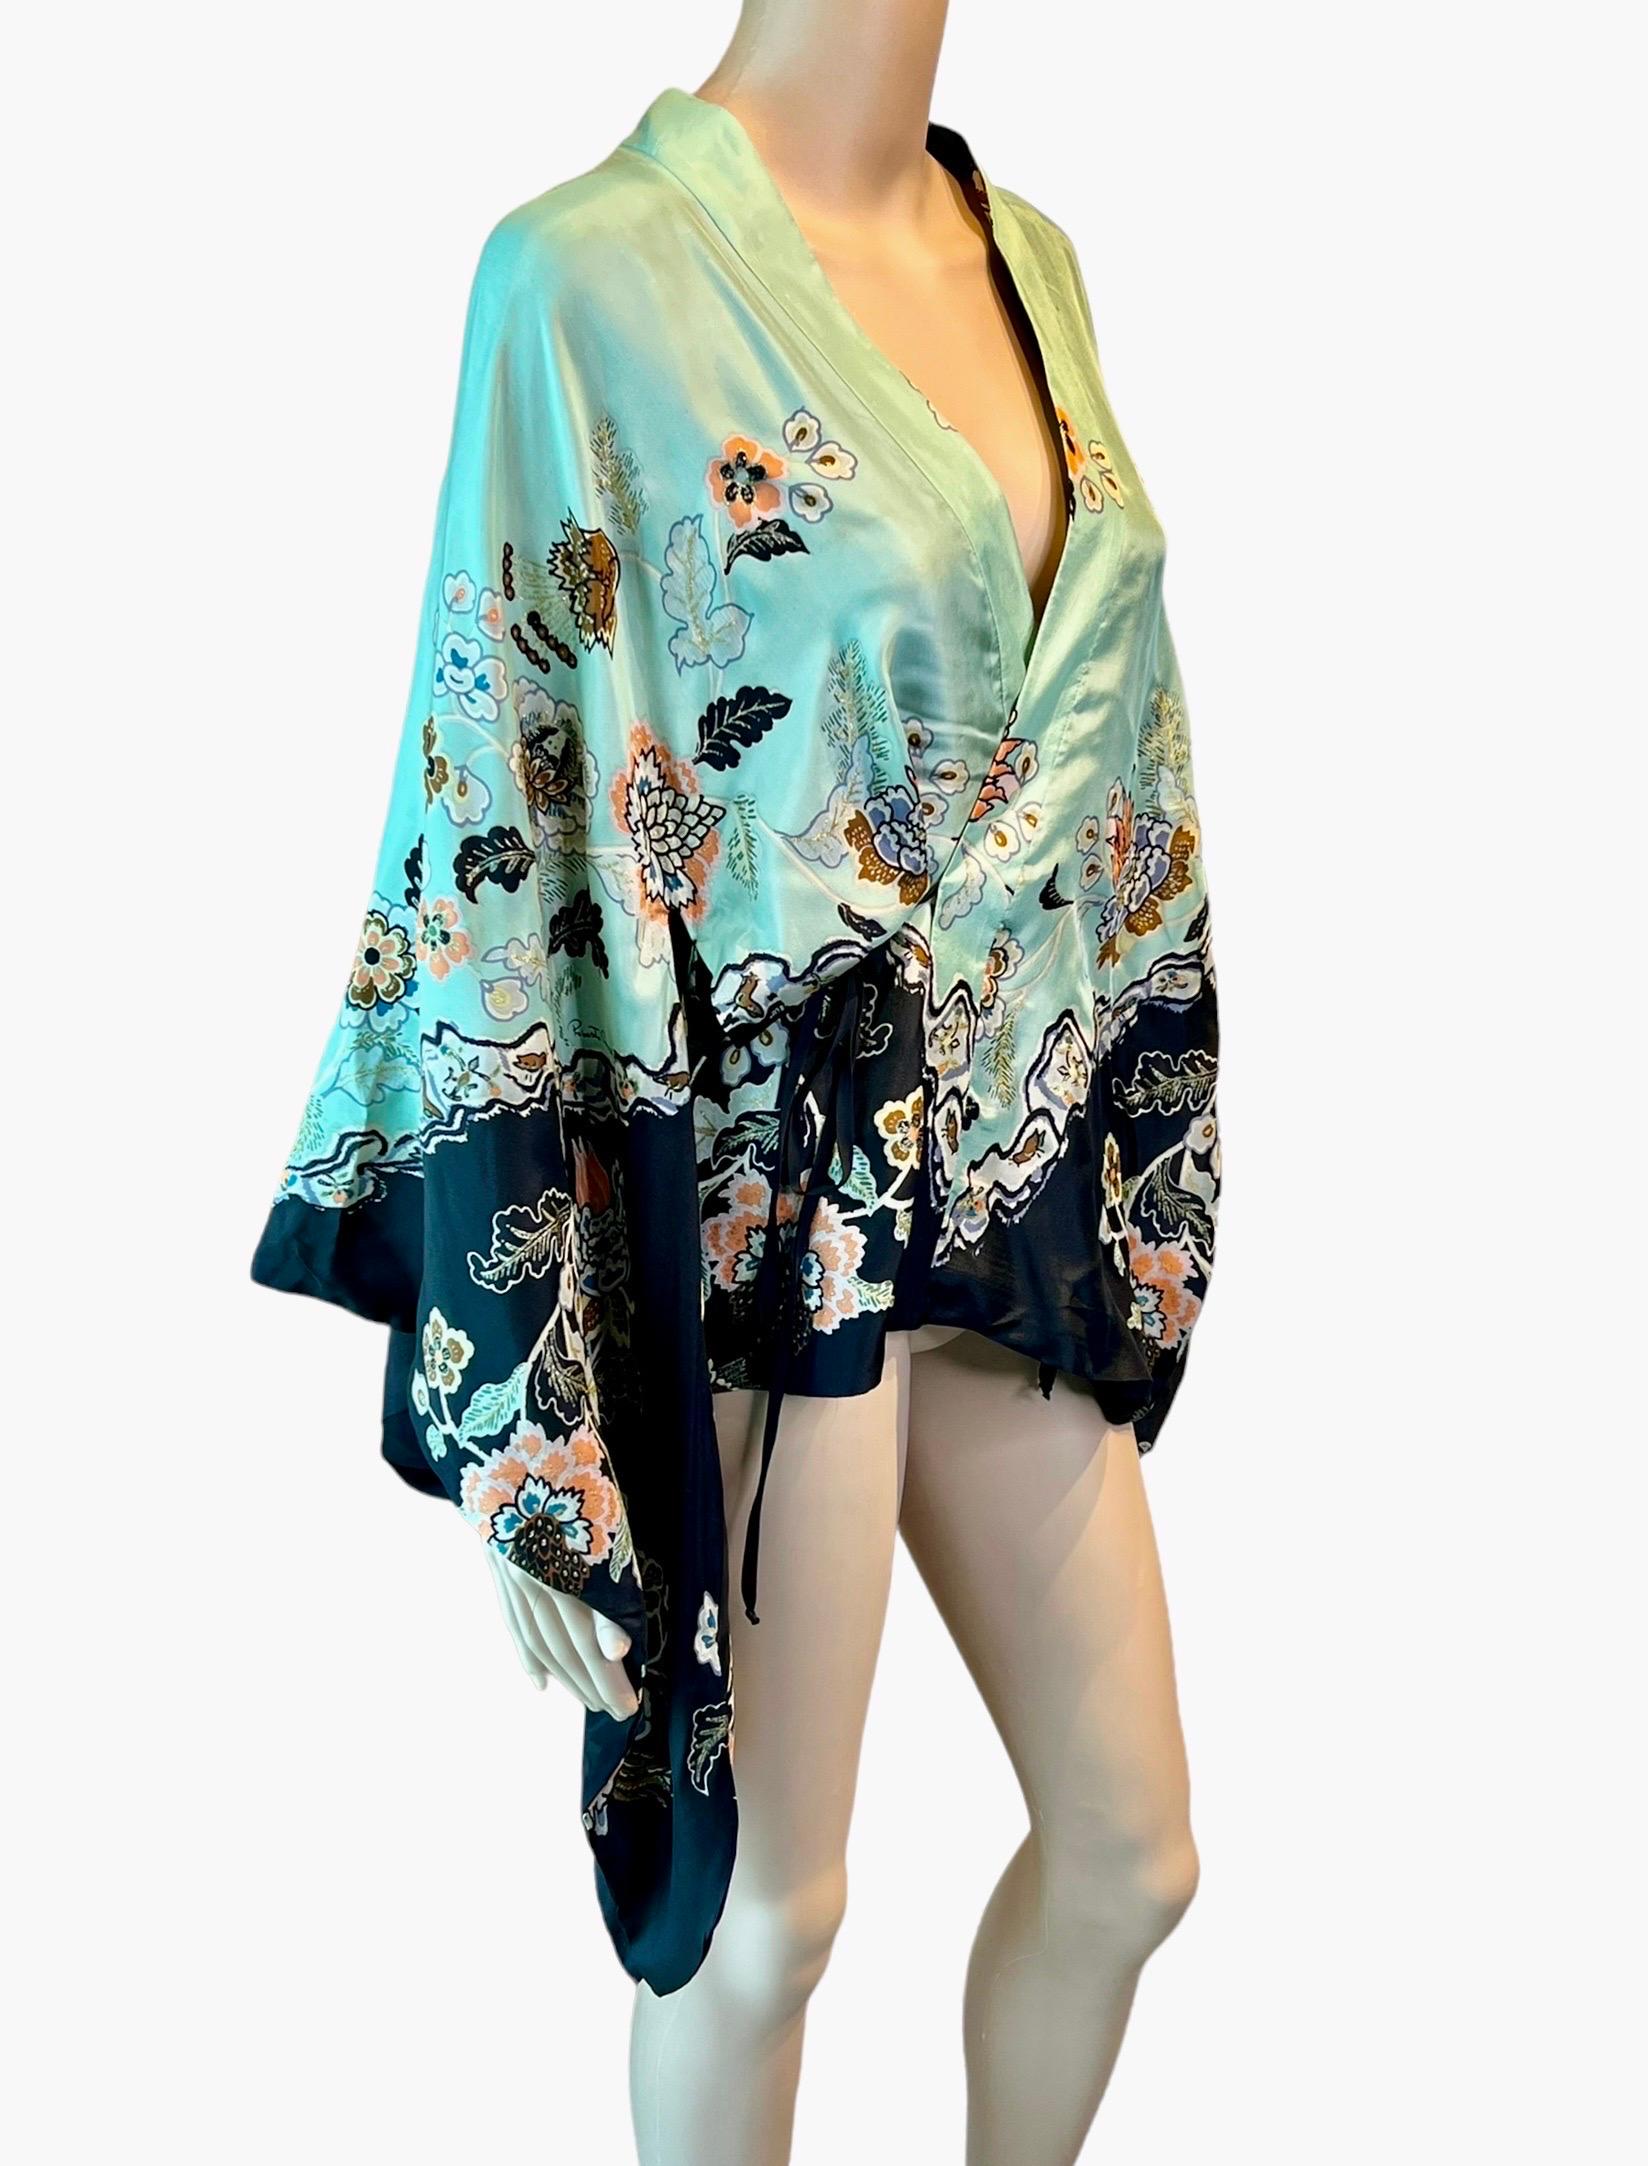 Roberto Cavalli S/S 2003 Runway Chinoiserie Print Silk Kimono Top For Sale 3